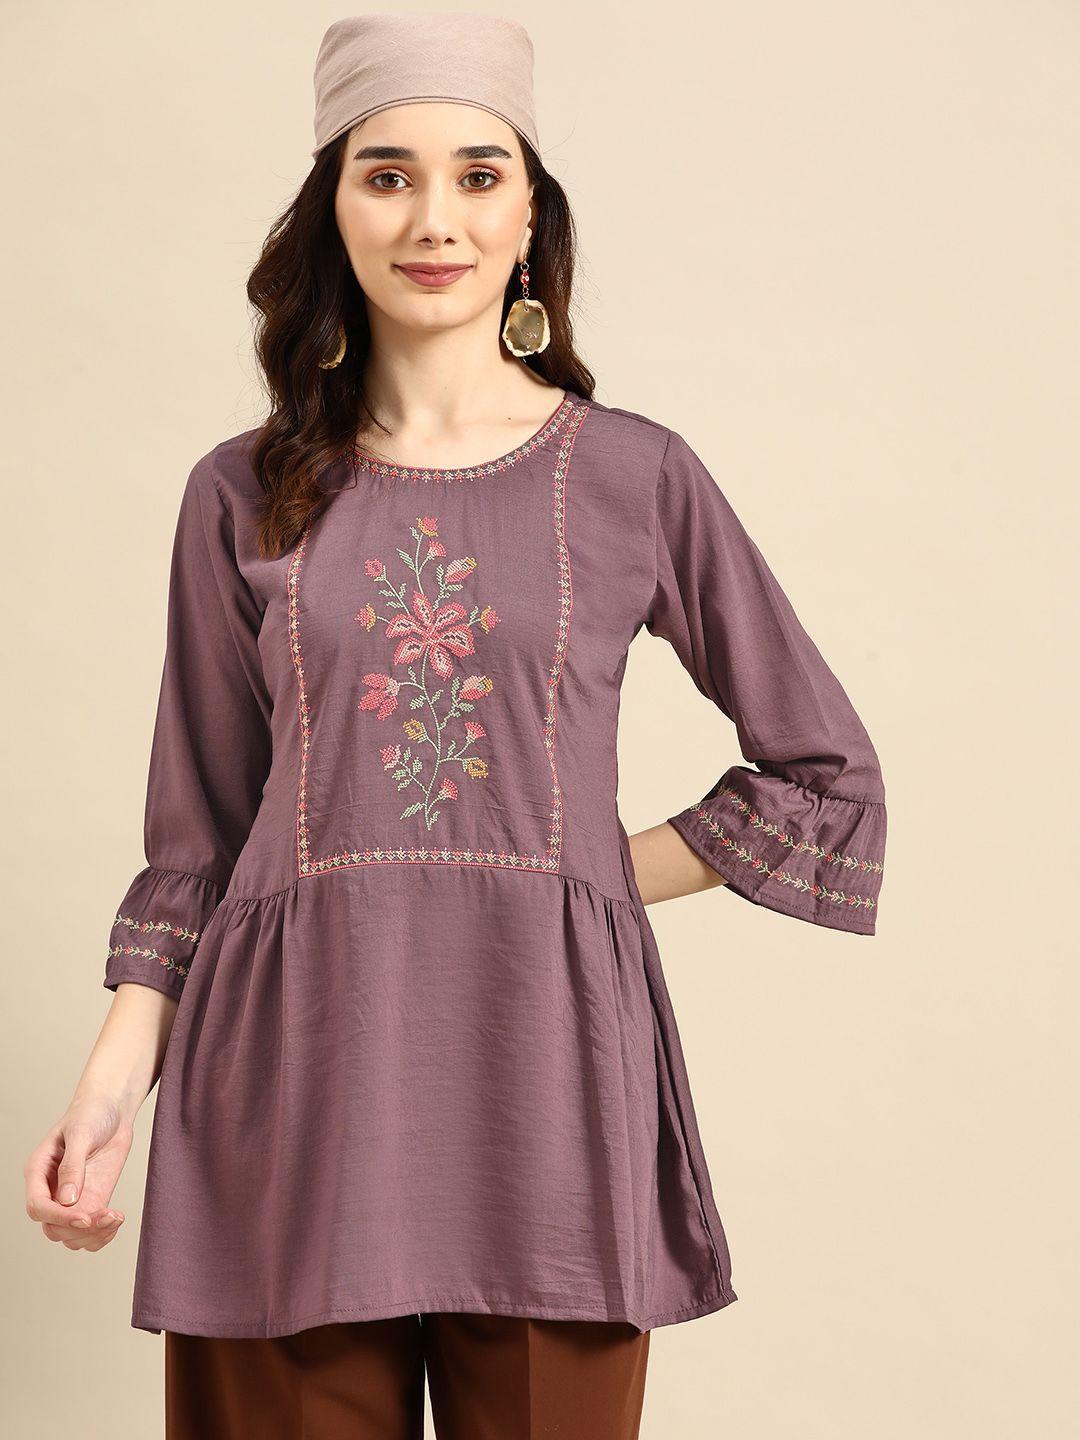 sangria purple embroidered bell sleeves longline top